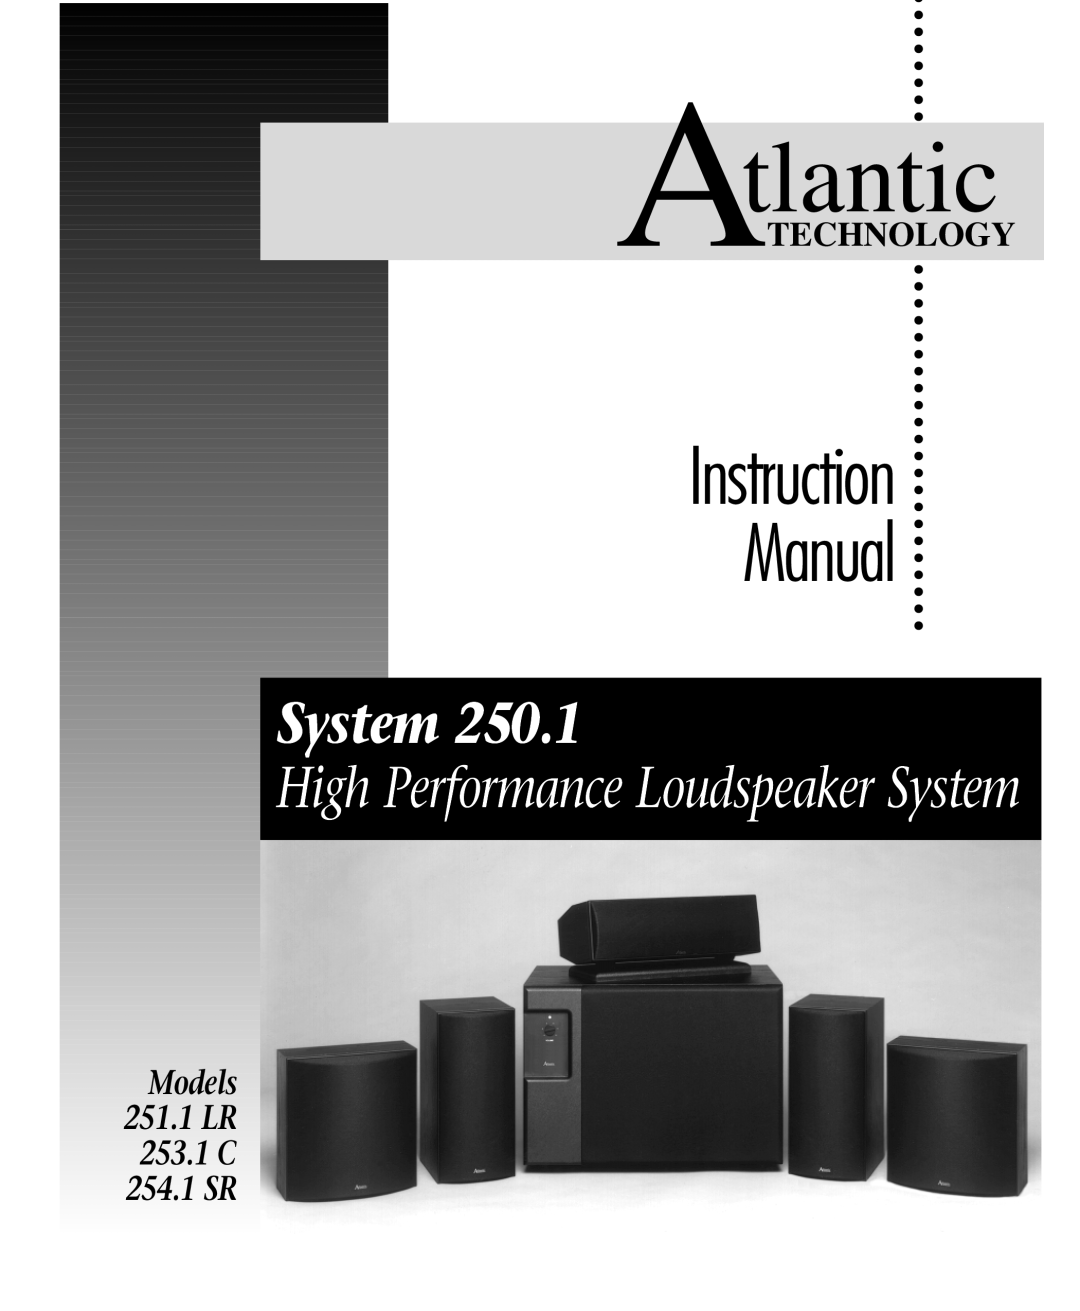 Atlantic Technology 253.1 C, 254.1 SR instruction manual Technology, Atlantic, High Performance Loudspeaker System 